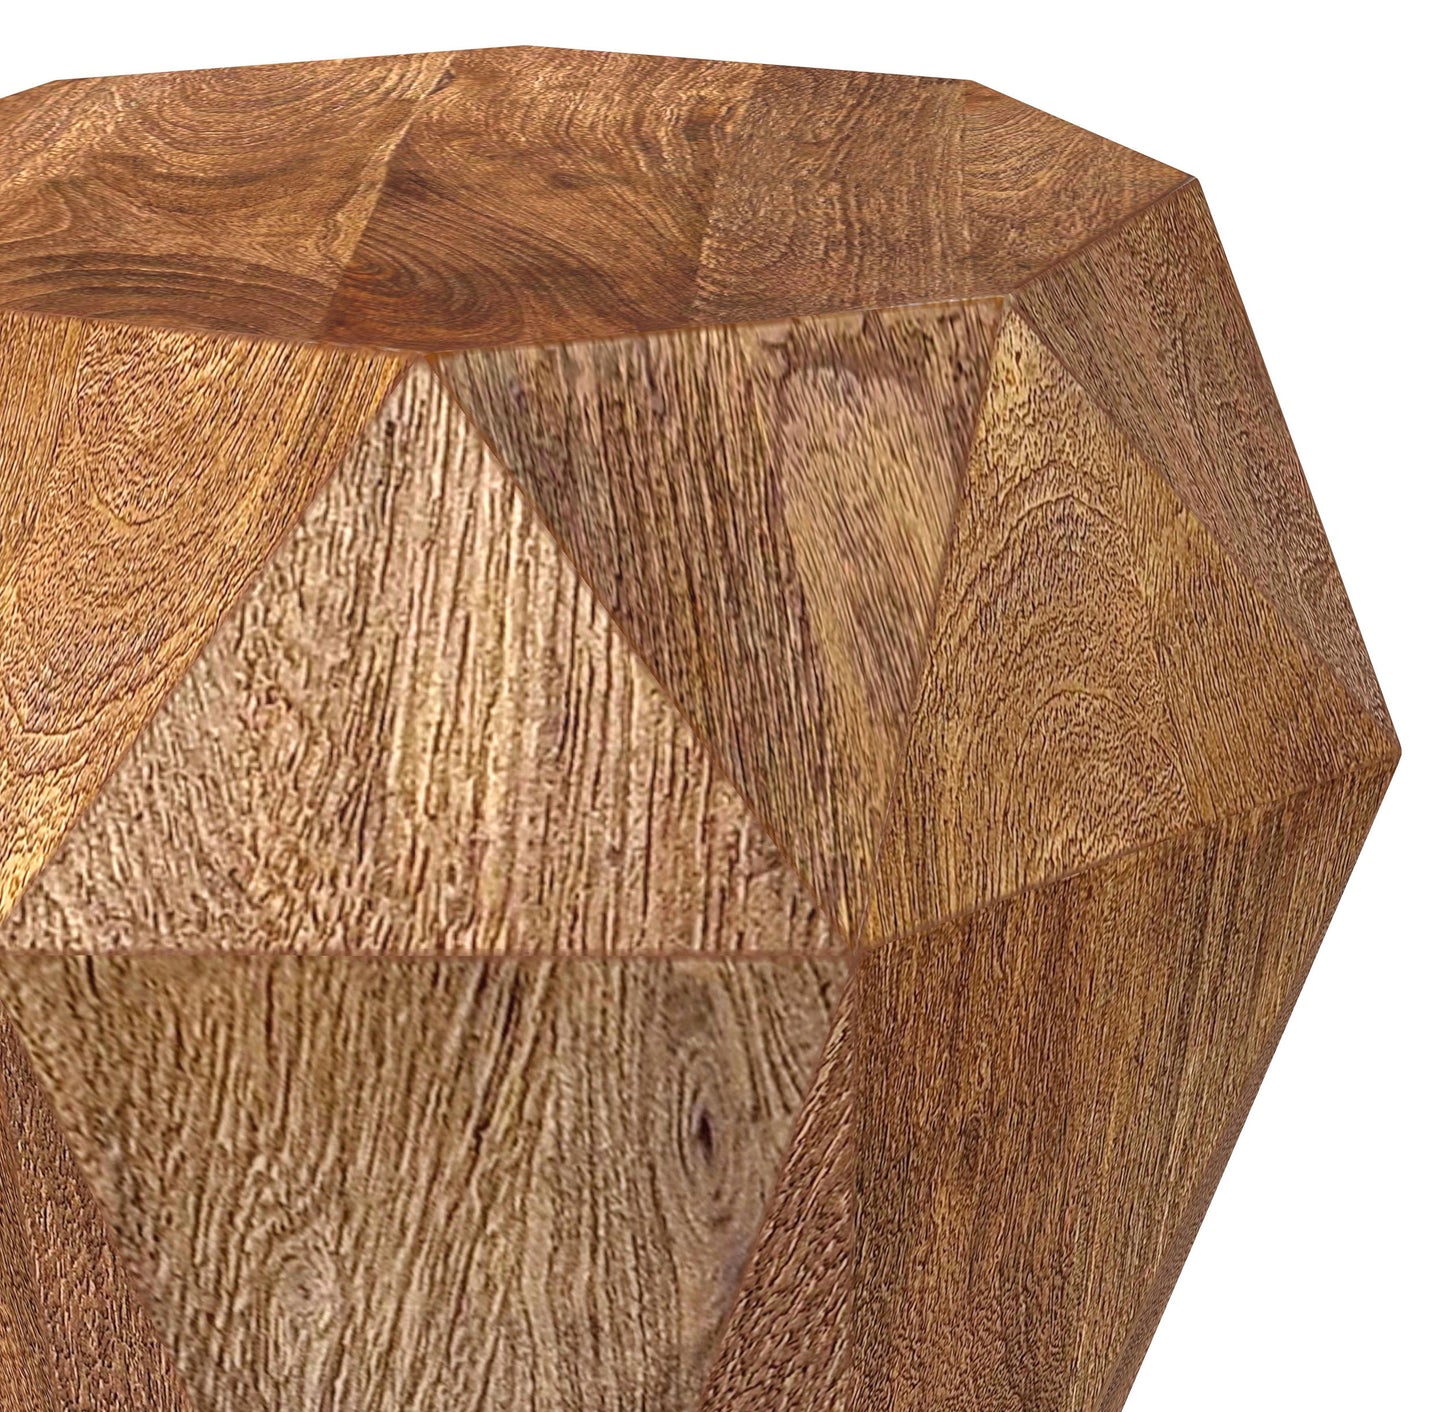 Jacinto Geometric Solid Mango Wood Side Table Natural Brown